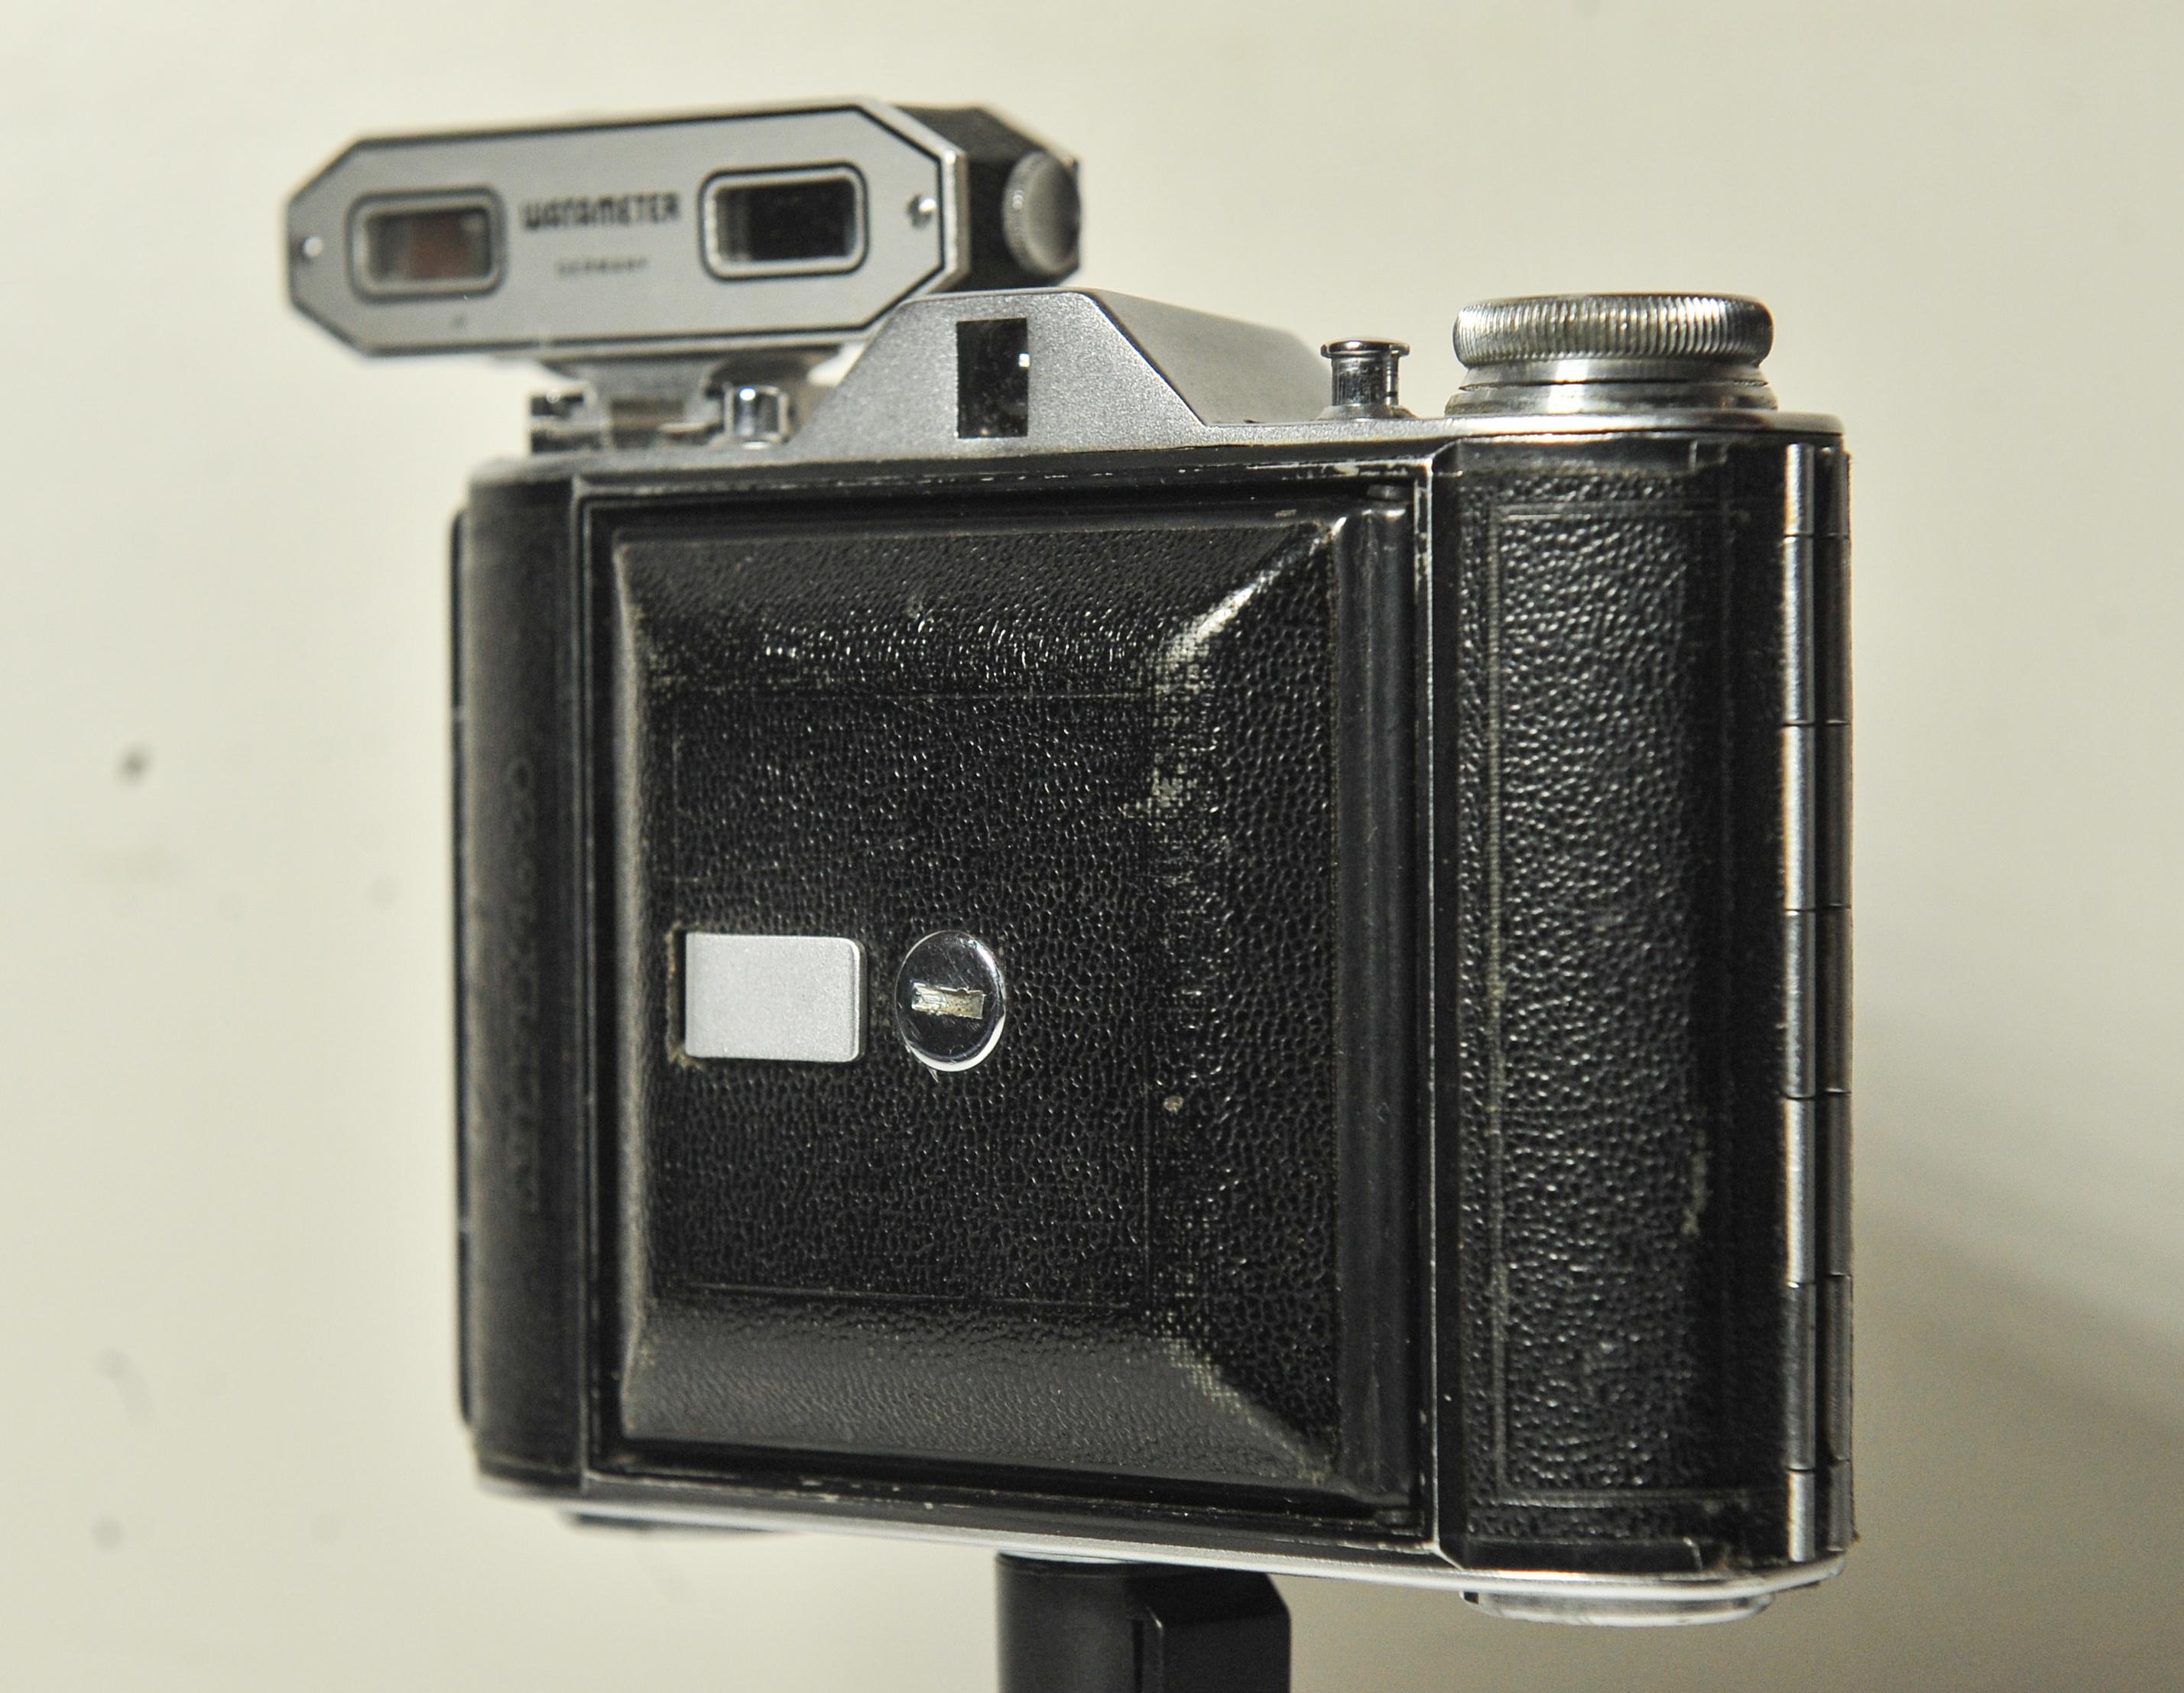 A British Made Ensign Selfix 16-20 Strut Folding Roll Medium Format Film Camera For Sale 1